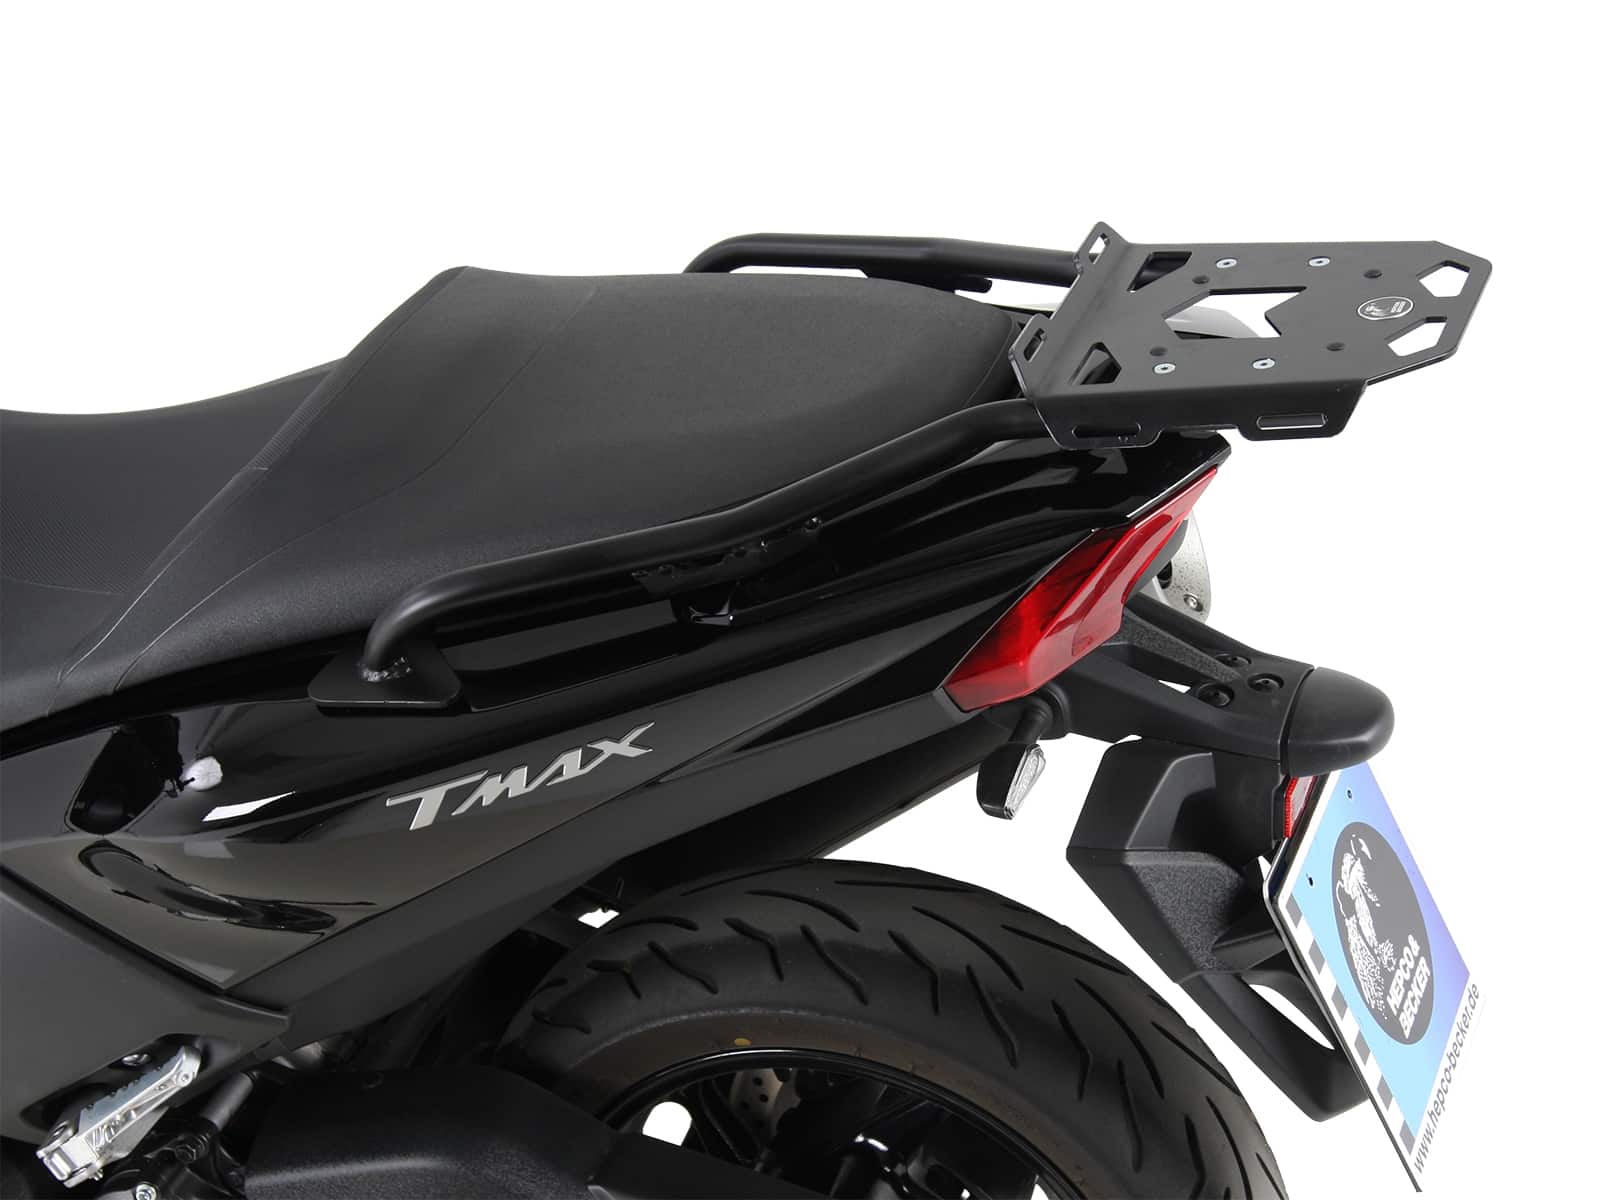 Minirack Softgepäck-Heckträger schwarz für Yamaha TMAX 530/SX/DX (2018-)